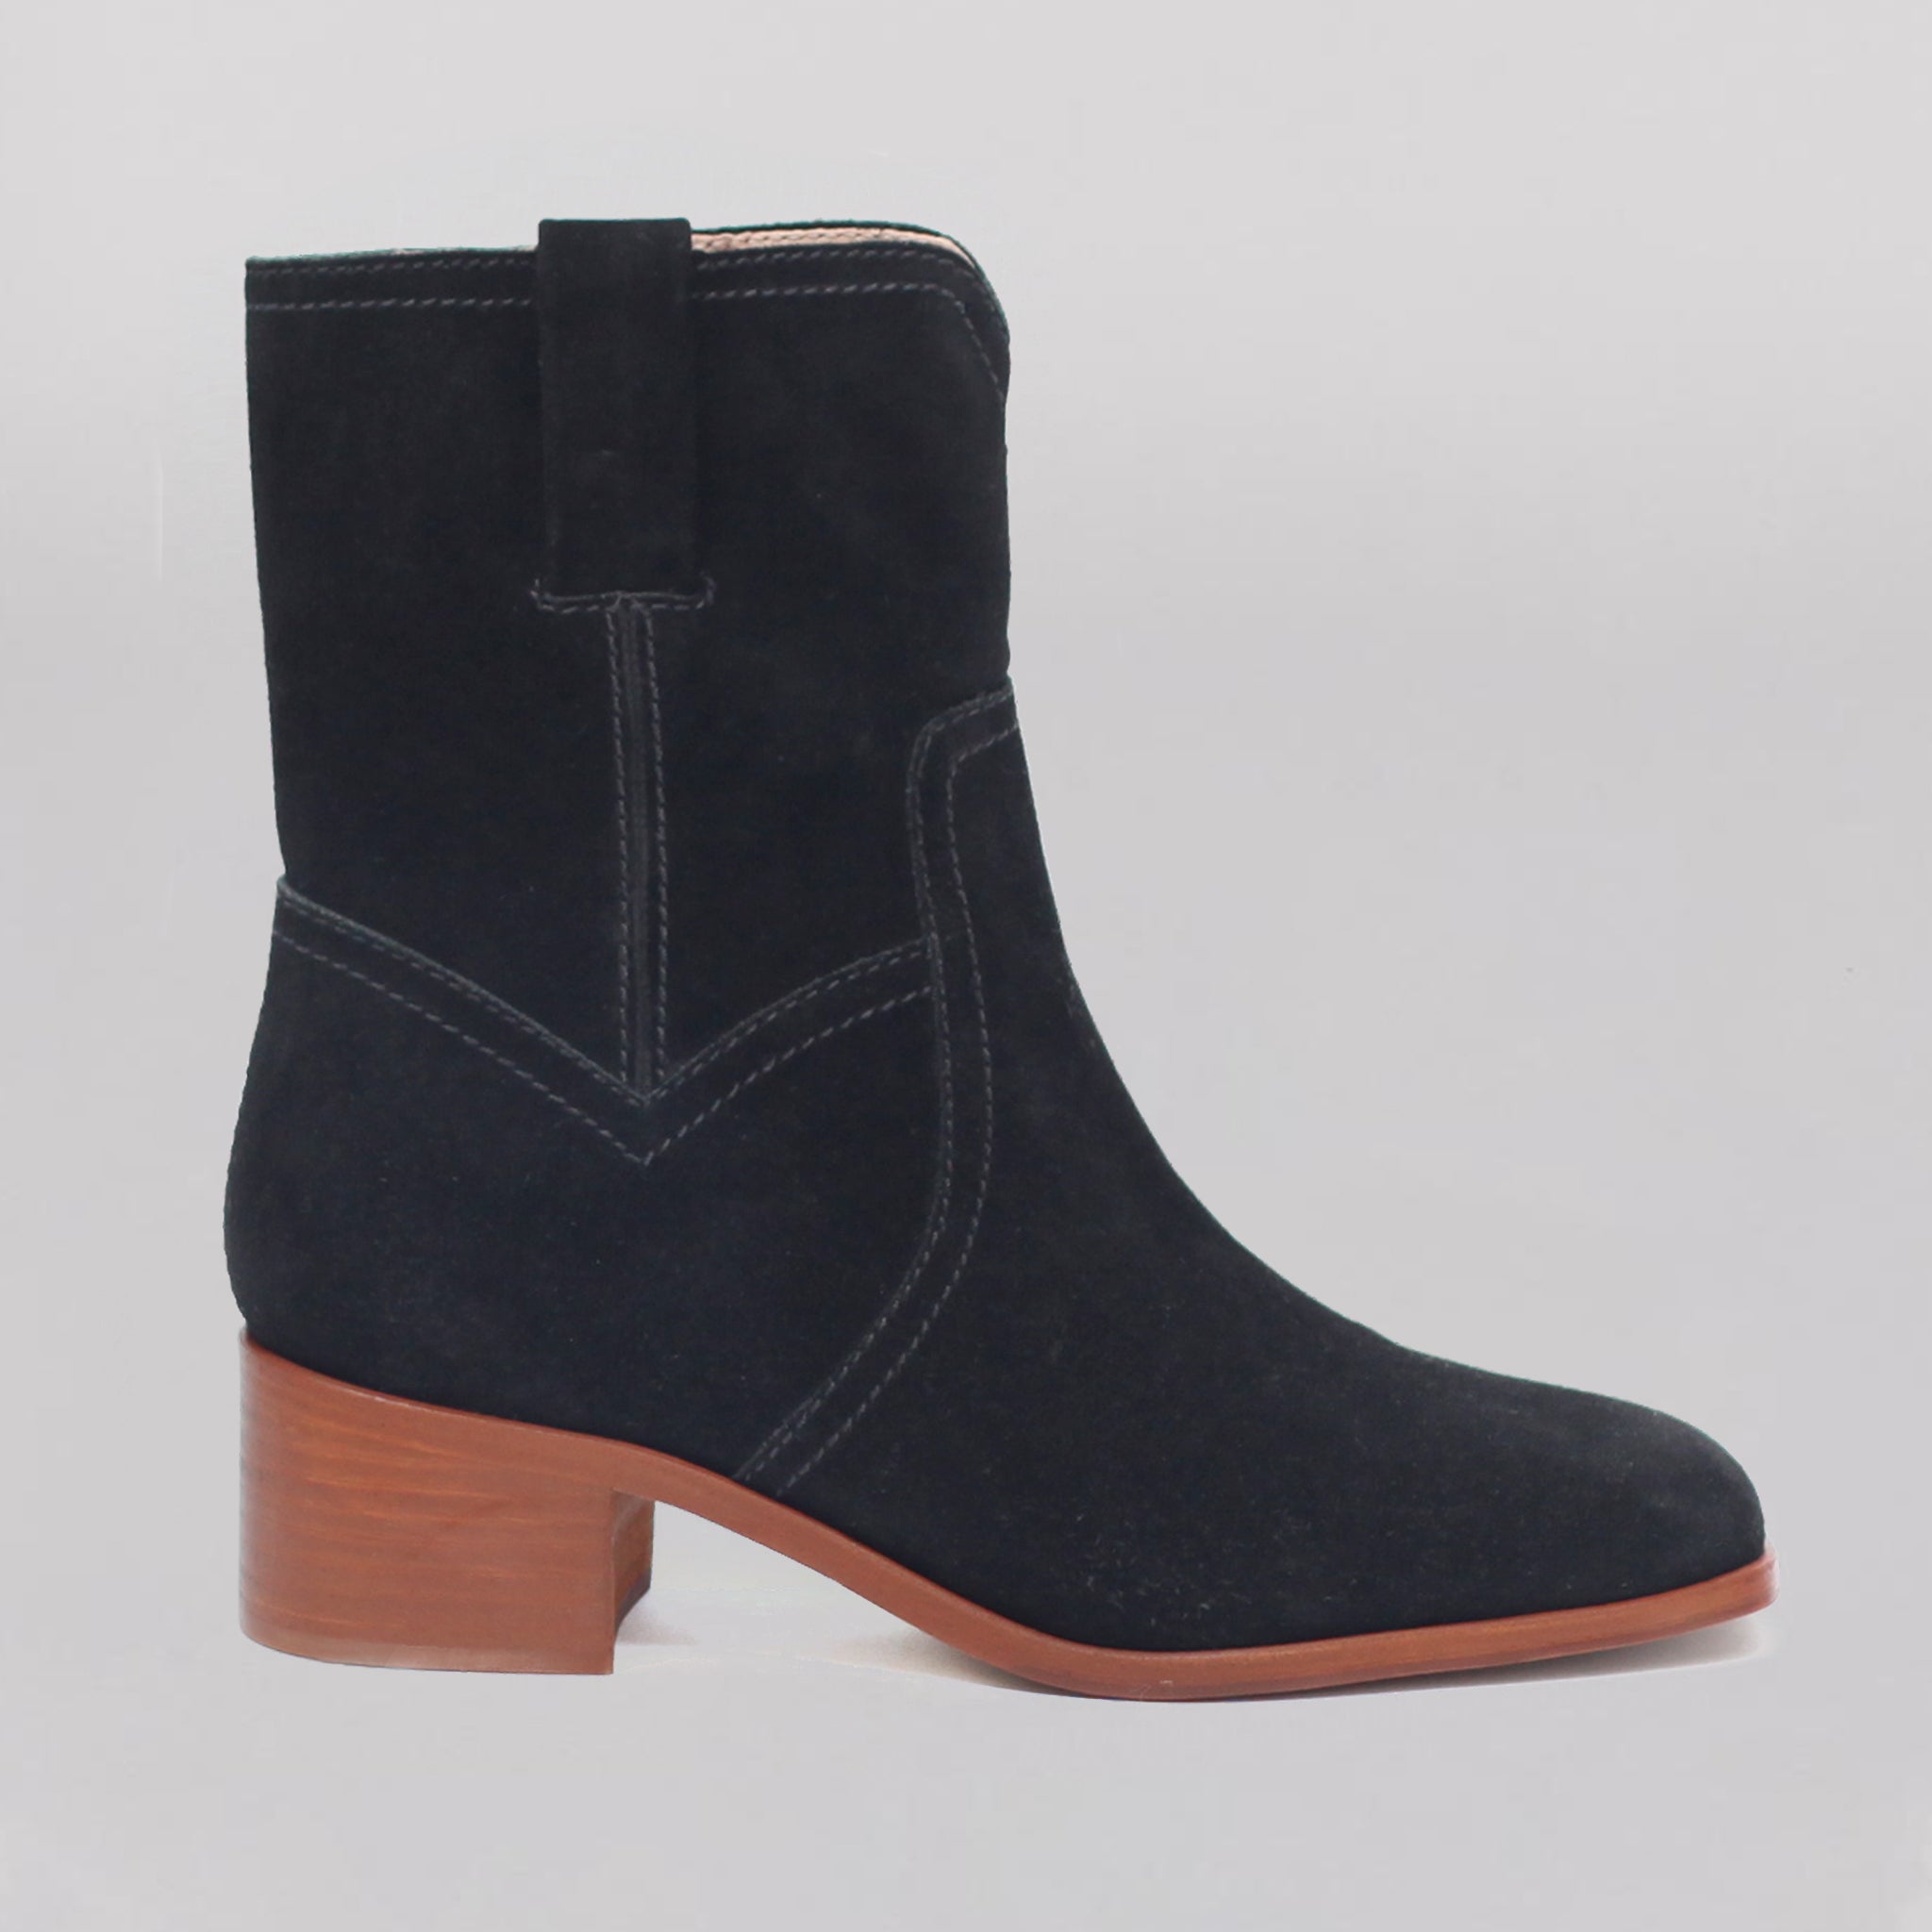 Tilda boot, black